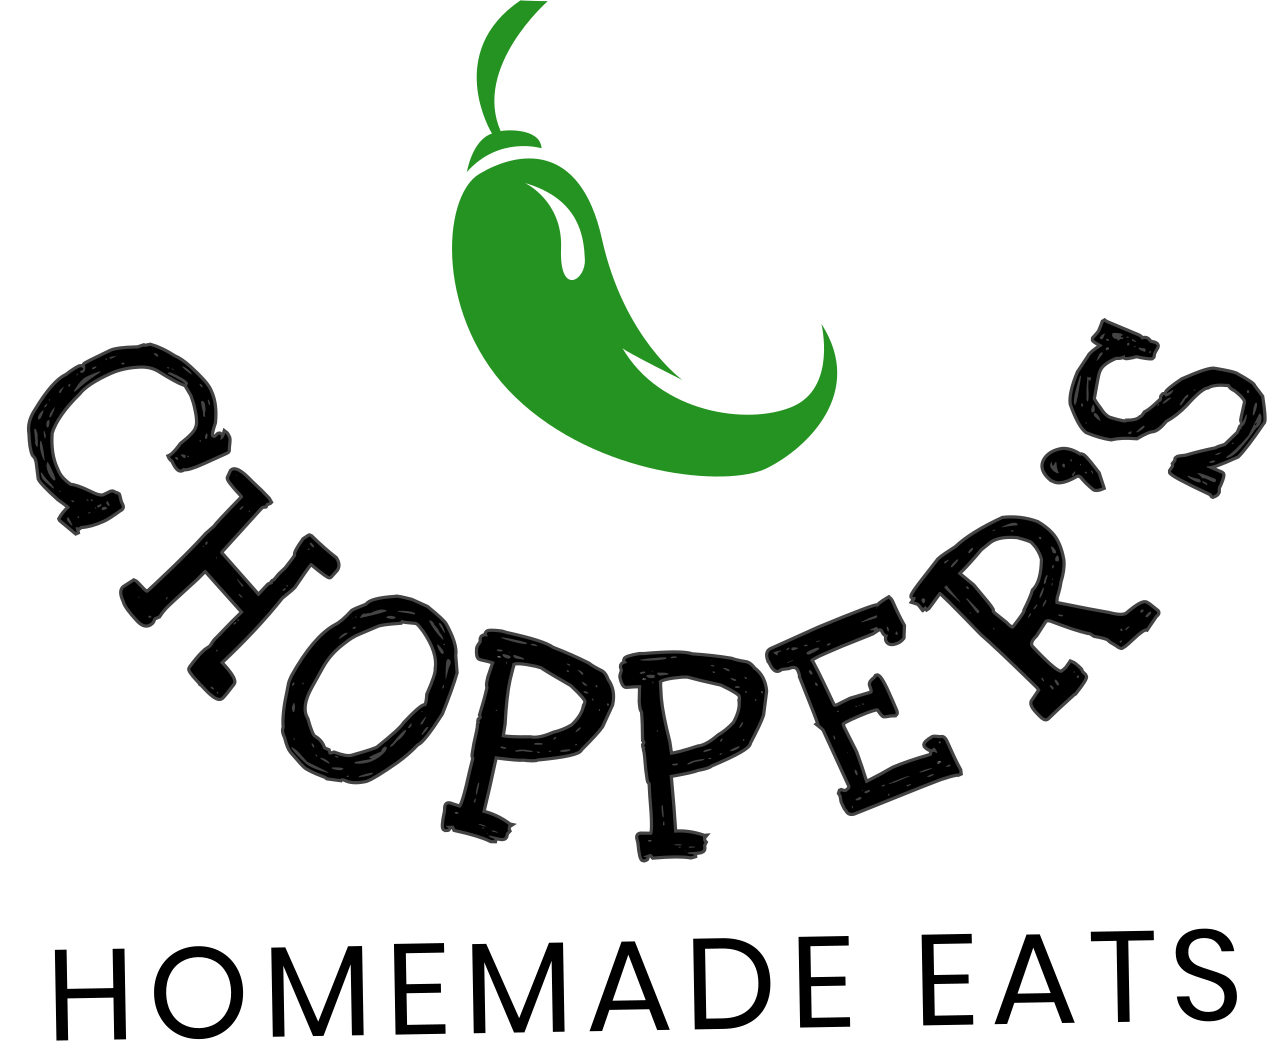 CHOPPER'S's logo